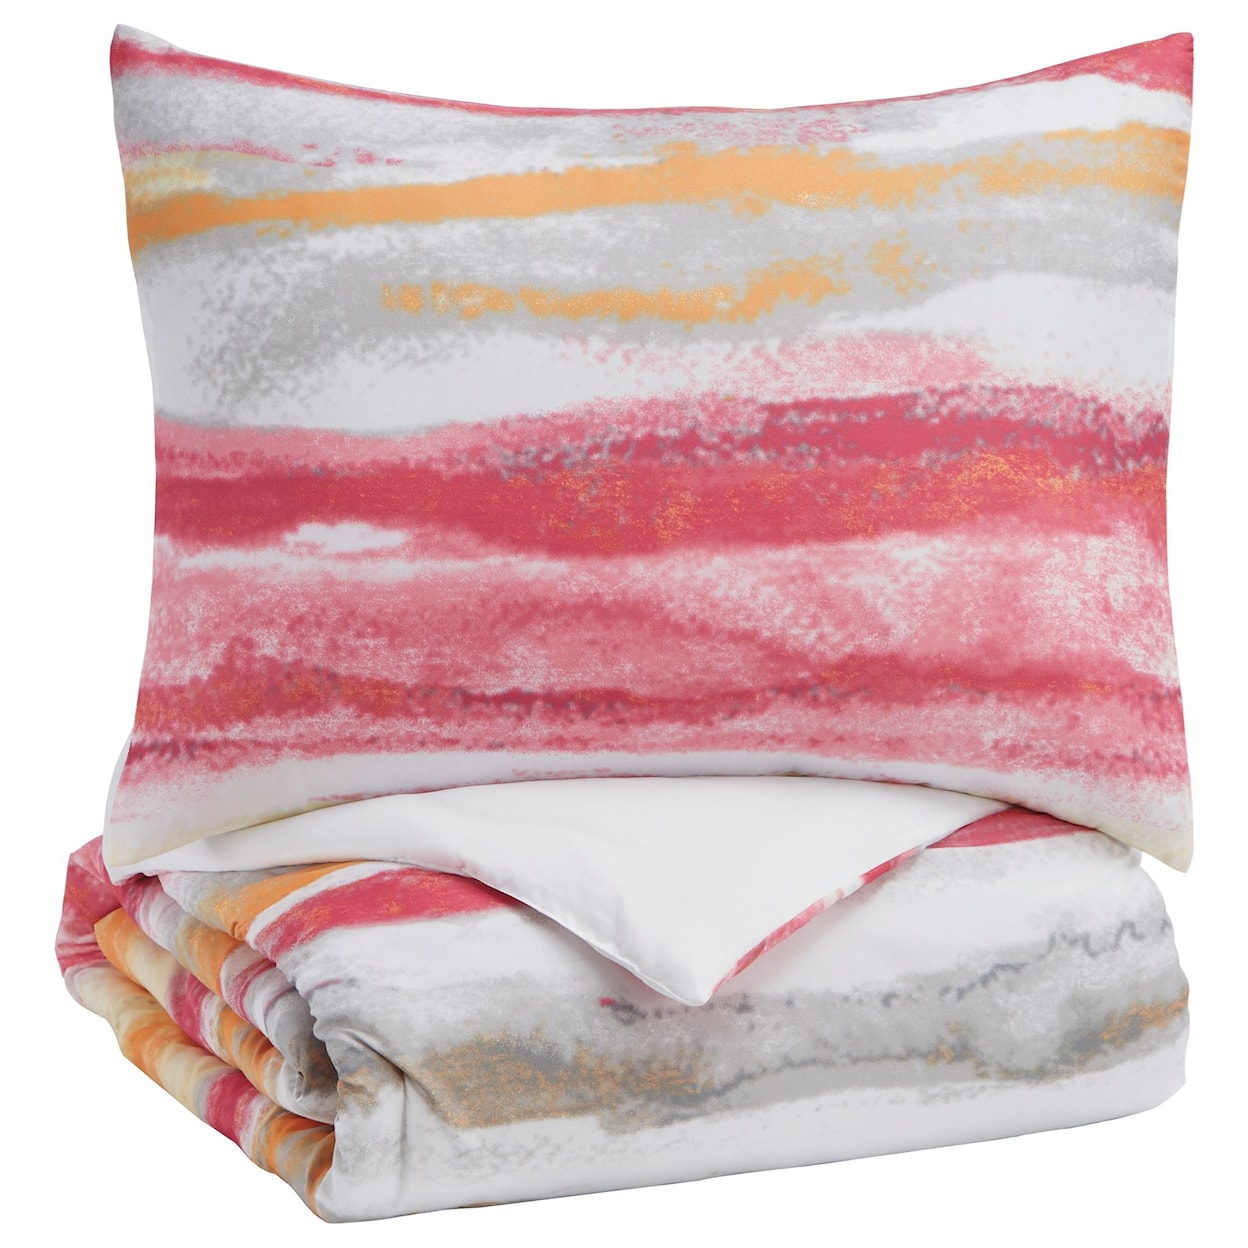 Ashley Furniture Signature Design Bedding Sets Twin Tammy Pink/Orange Comforter Set